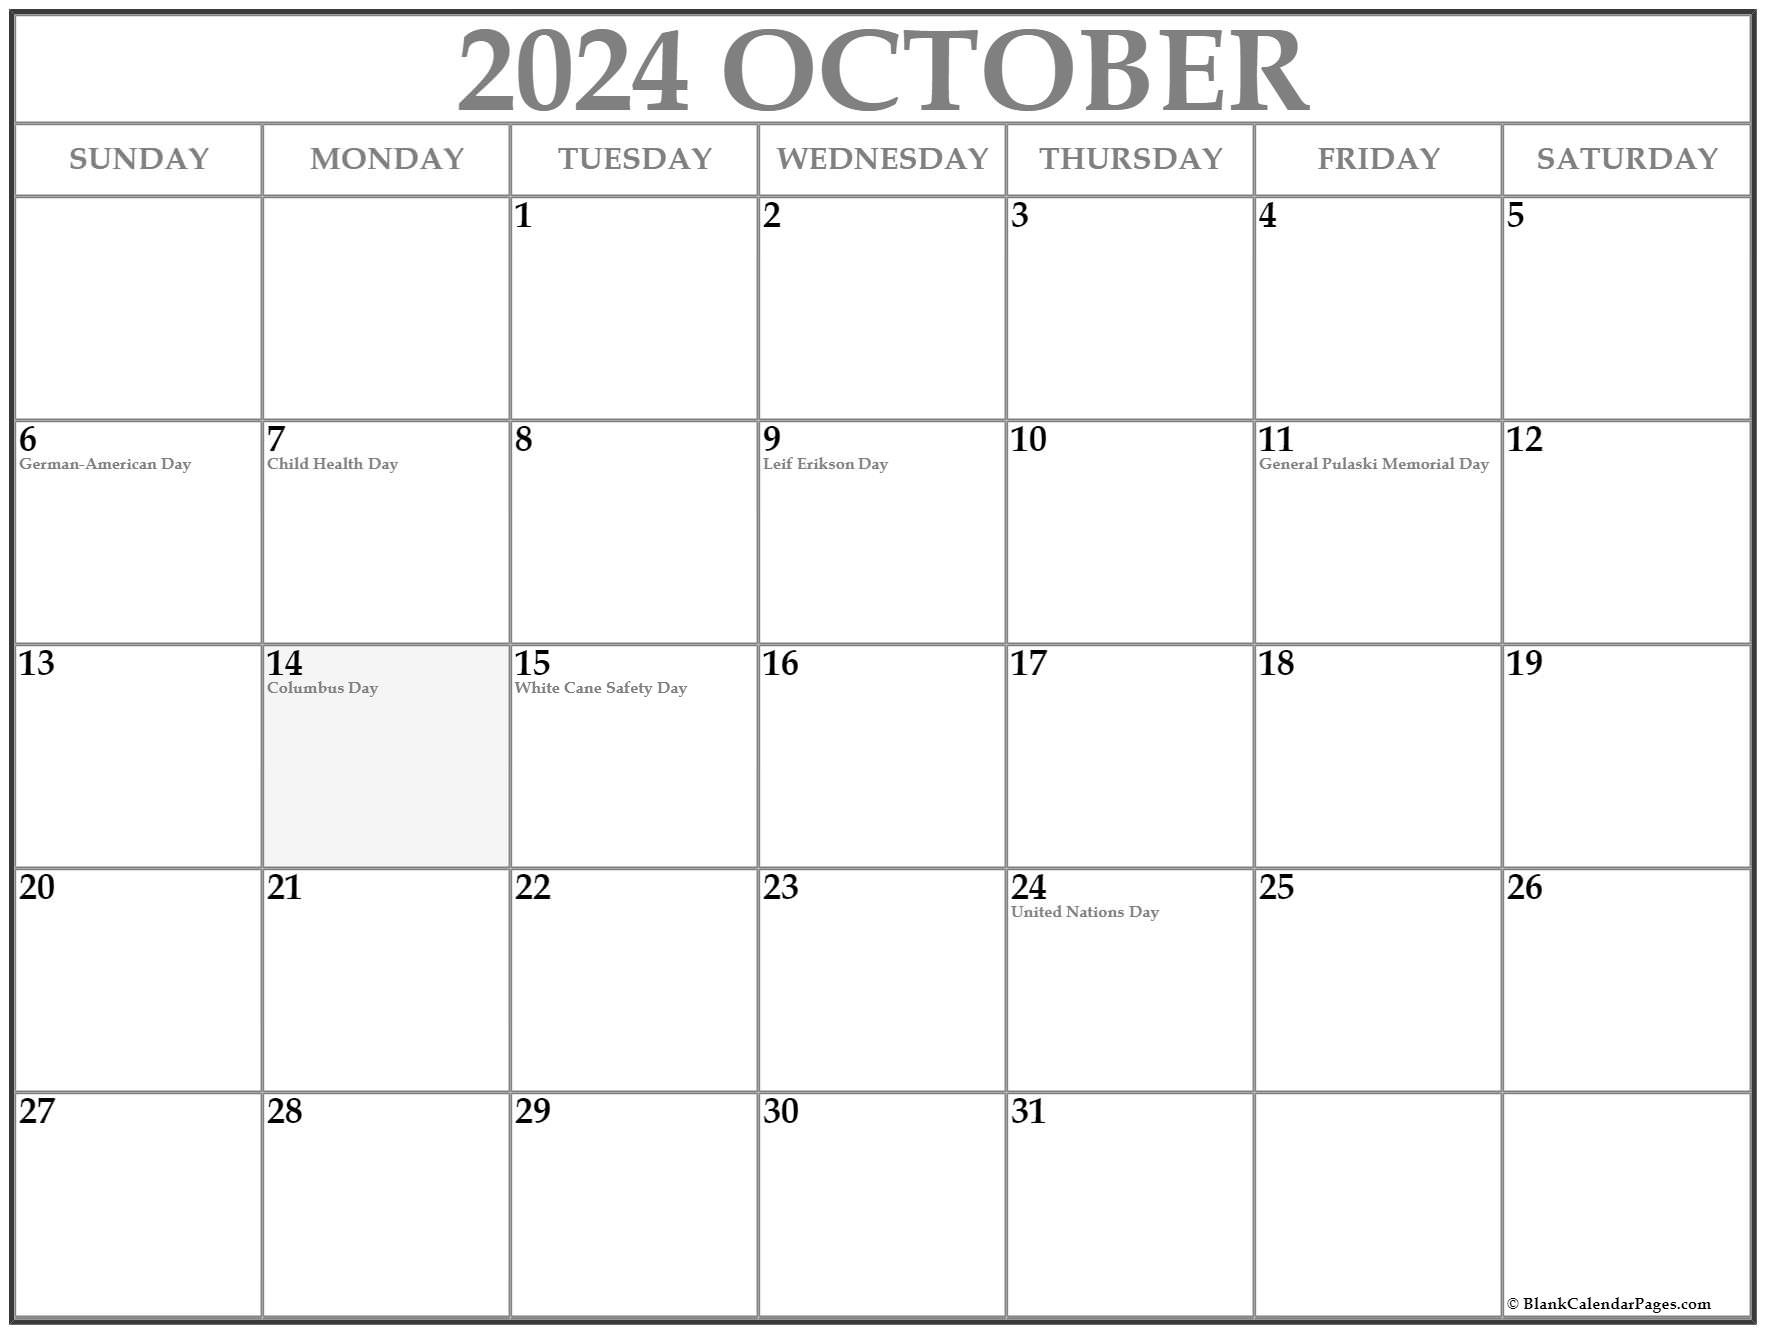 October 2020 calendar with holidays